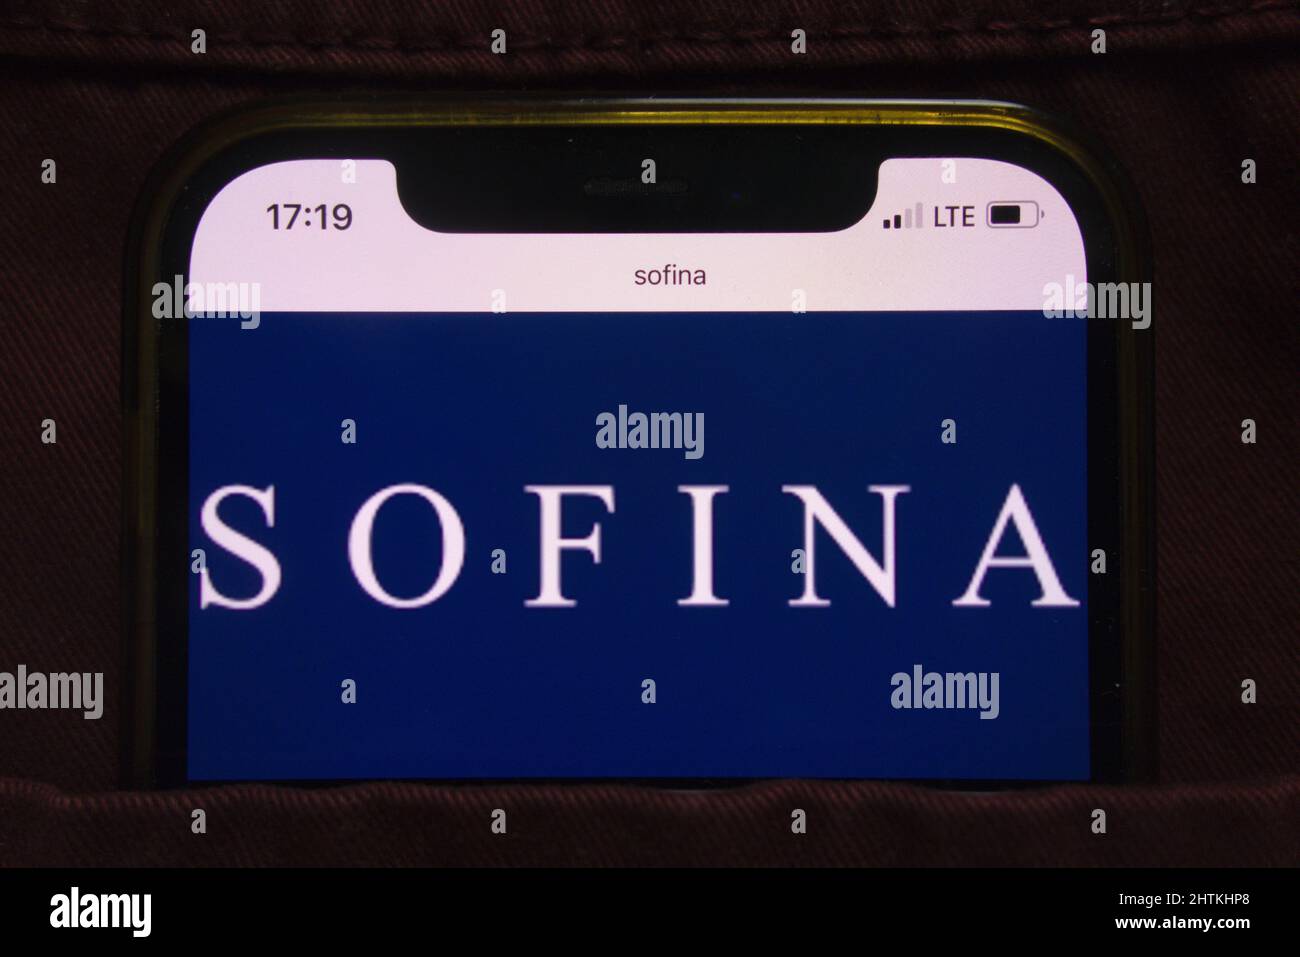 KONSKIE, POLAND - February 27, 2022: Sofina company logo displayed on mobile phone hidden in jeans pocket Stock Photo